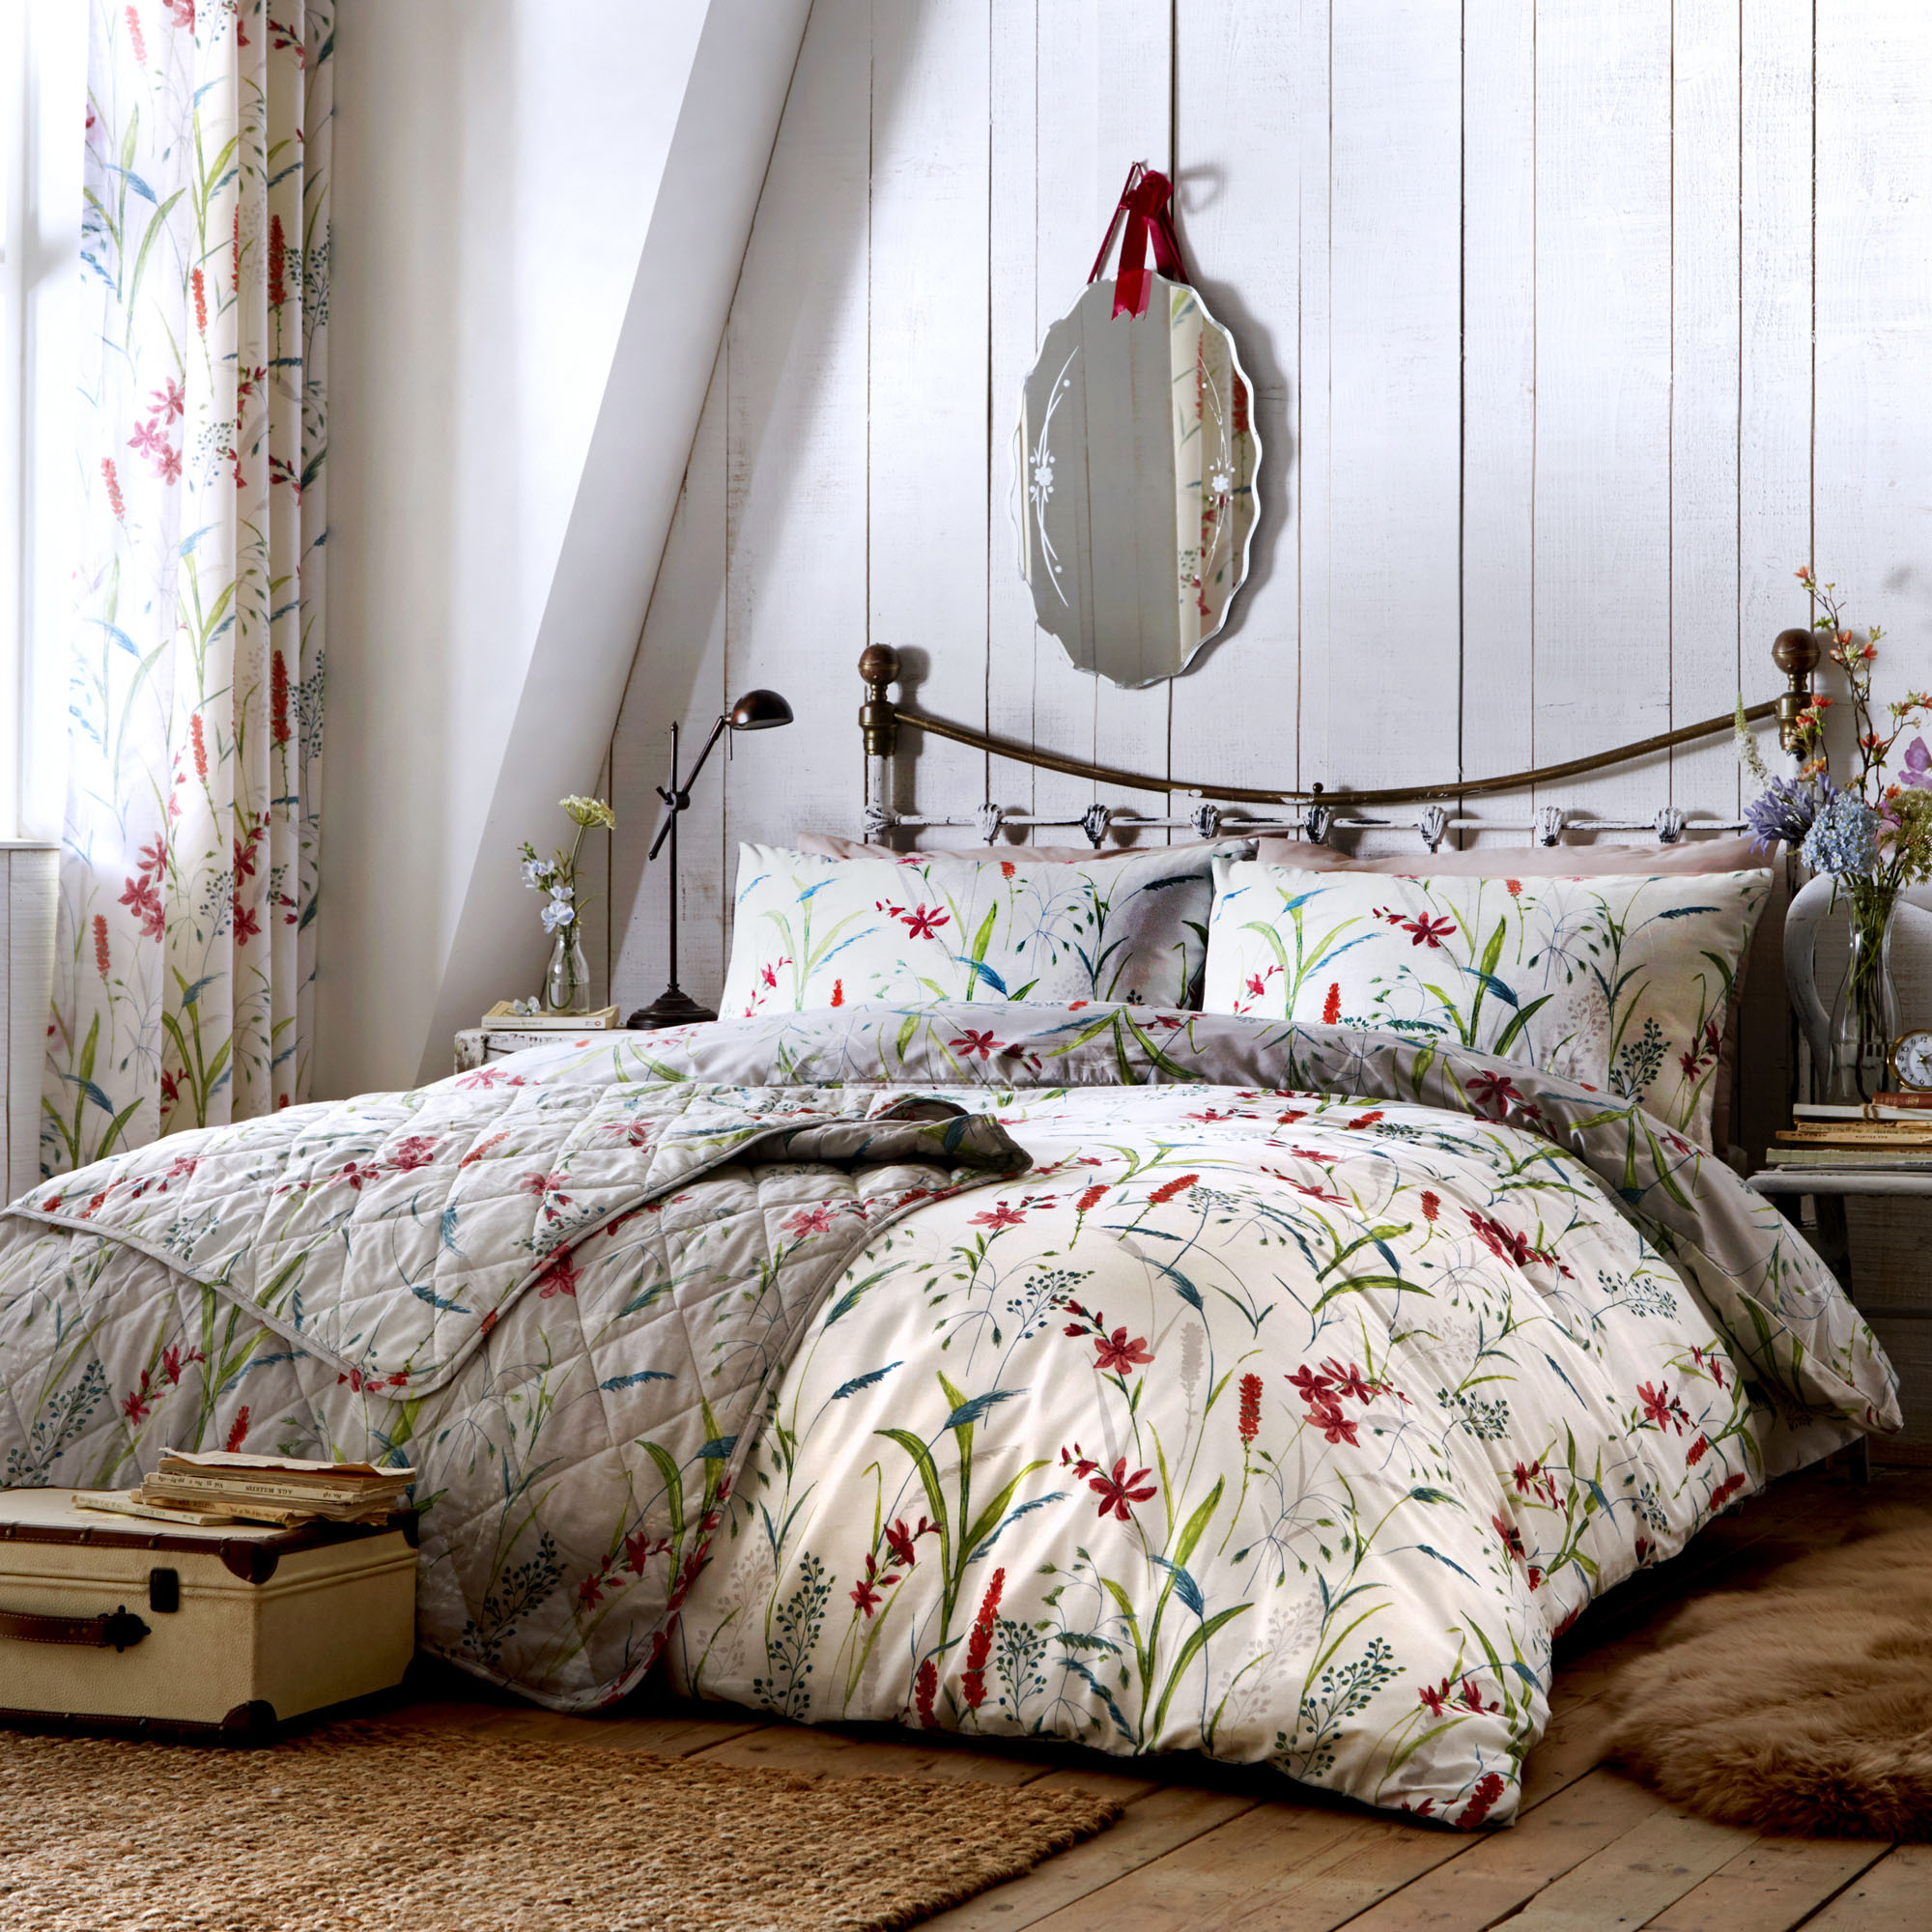 Details About Dreams Drapes Celine Multicolour Matching Bedroom Bedding Curtains